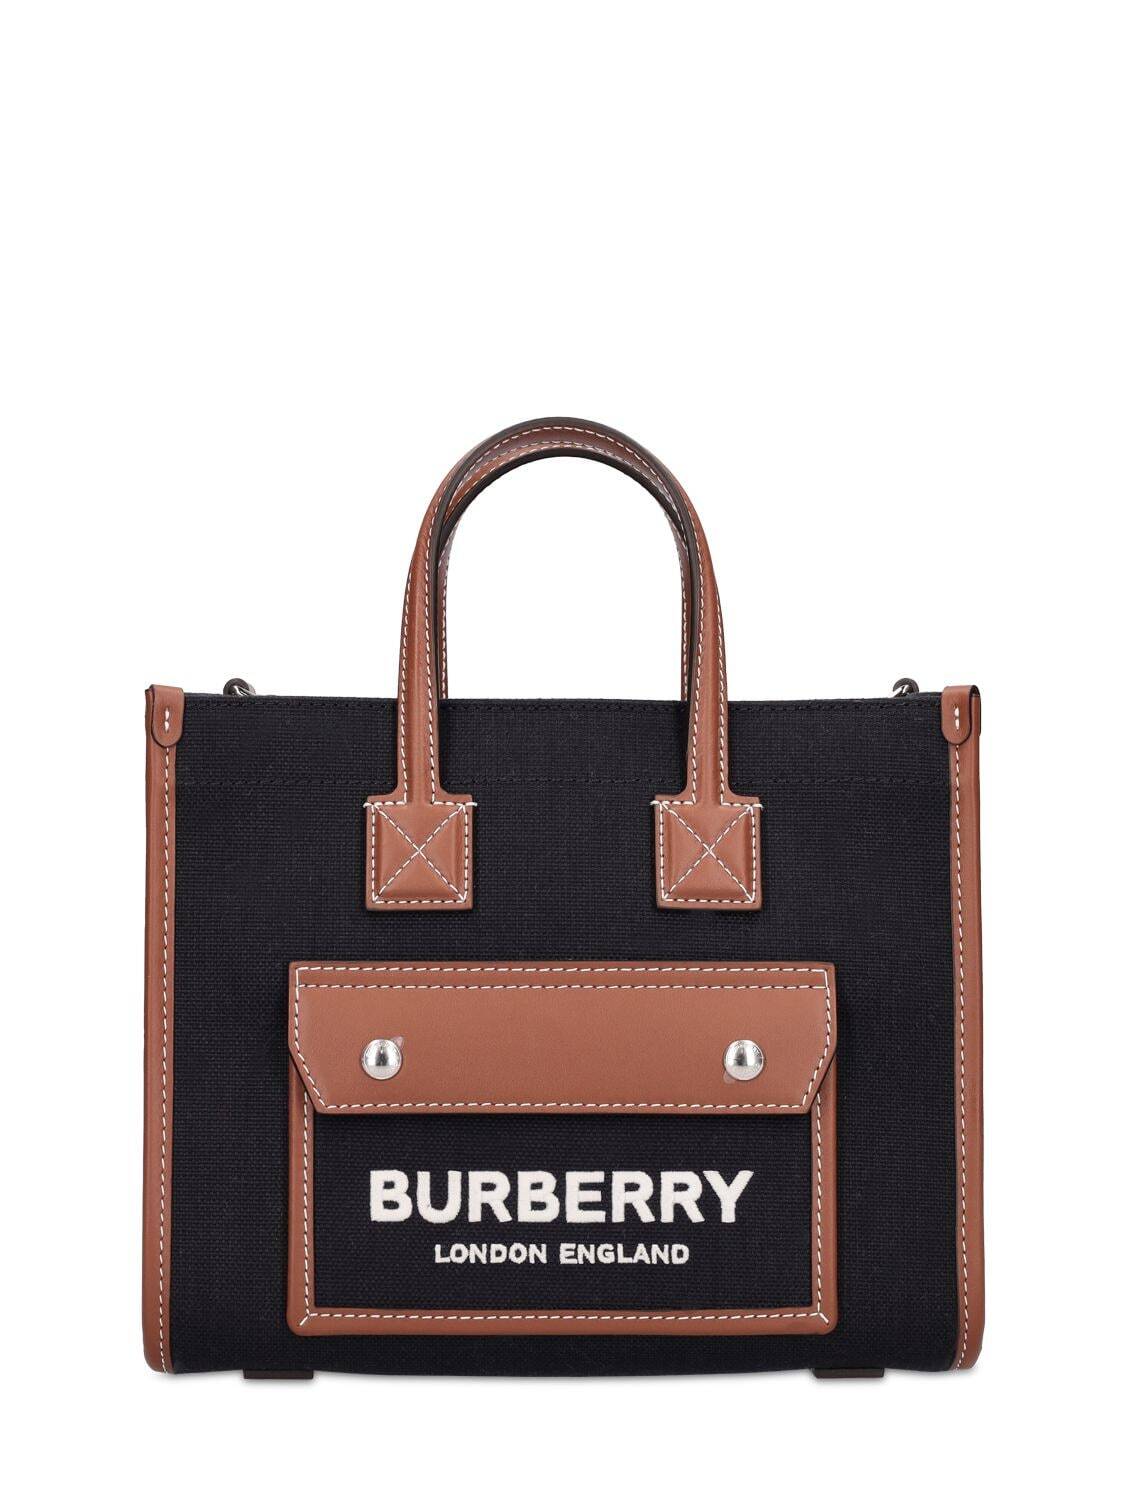 BURBERRY Mini Freya Leather & Canvas Tote Bag in black / tan